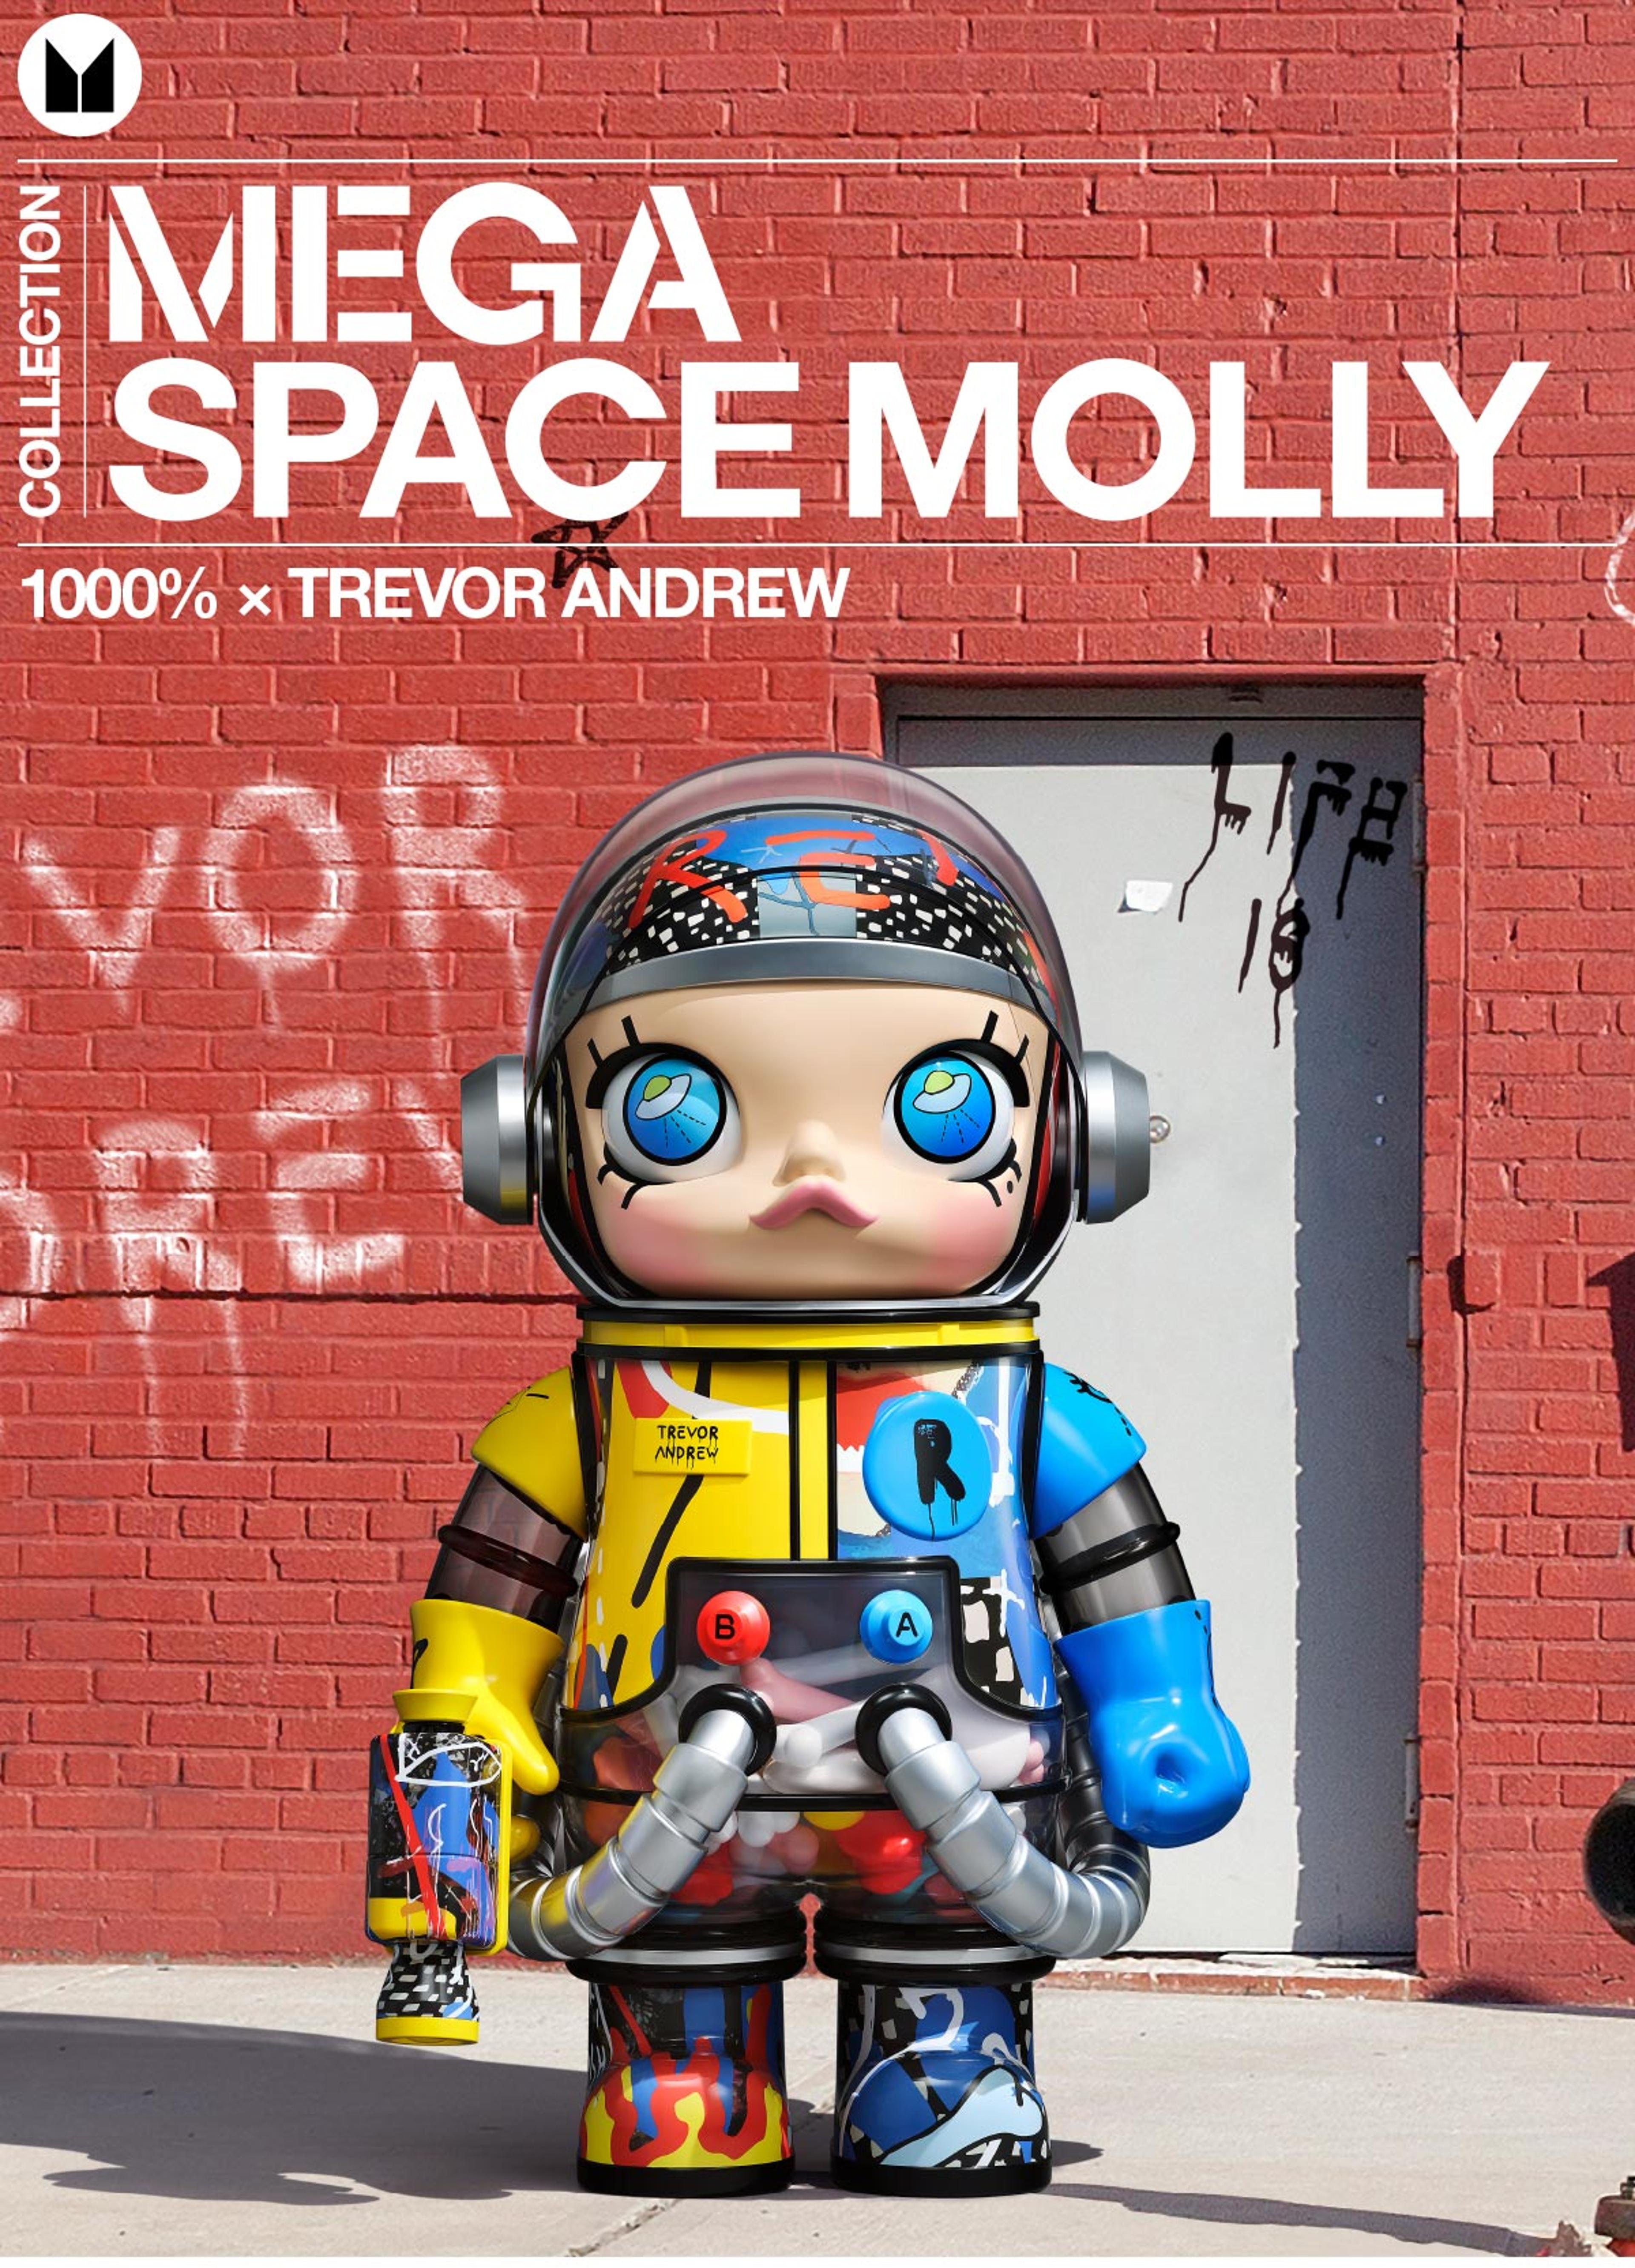 MEGA SPACE MOLLY 1000% Trevor Andrew